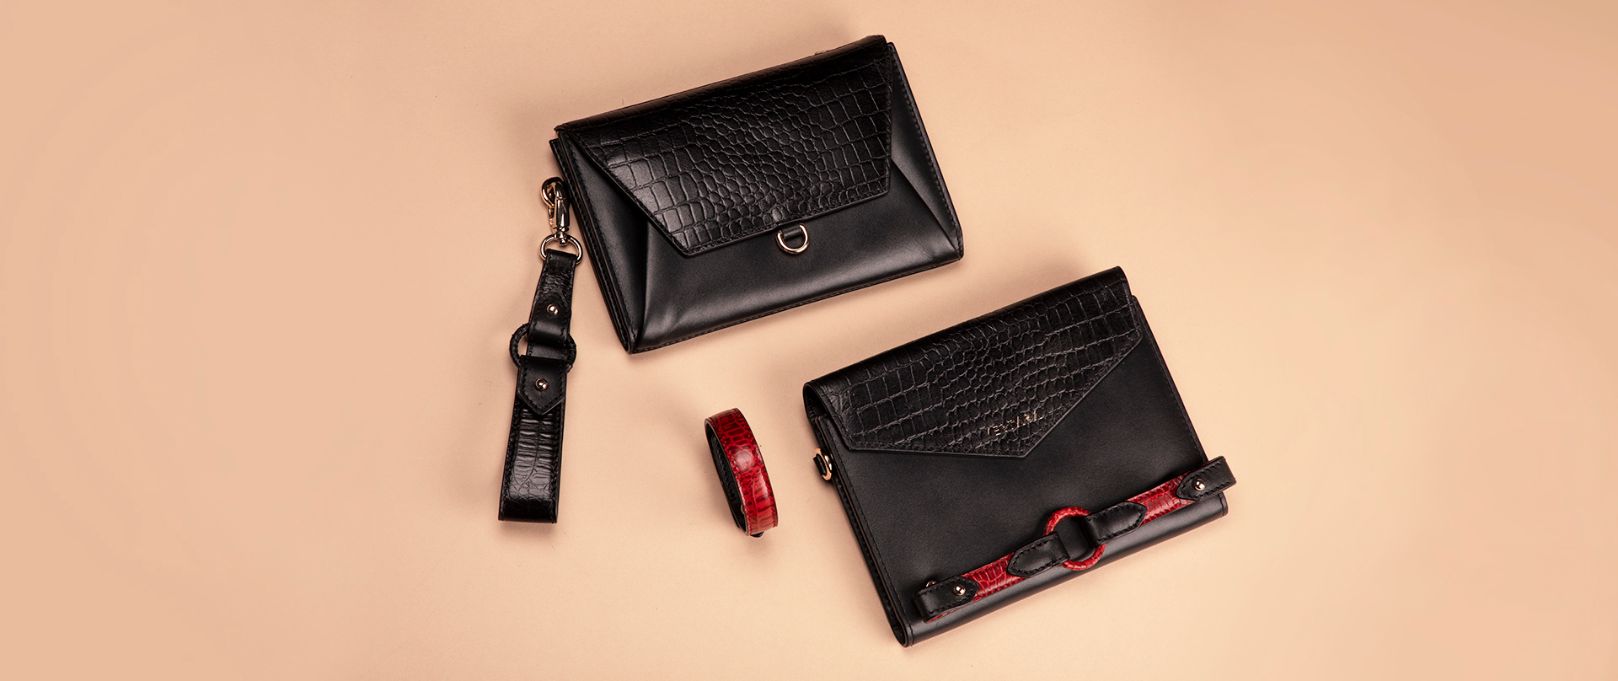 Ember handsfree Bag  & Sleek Wallet with bracelet & wristlet in Black leather